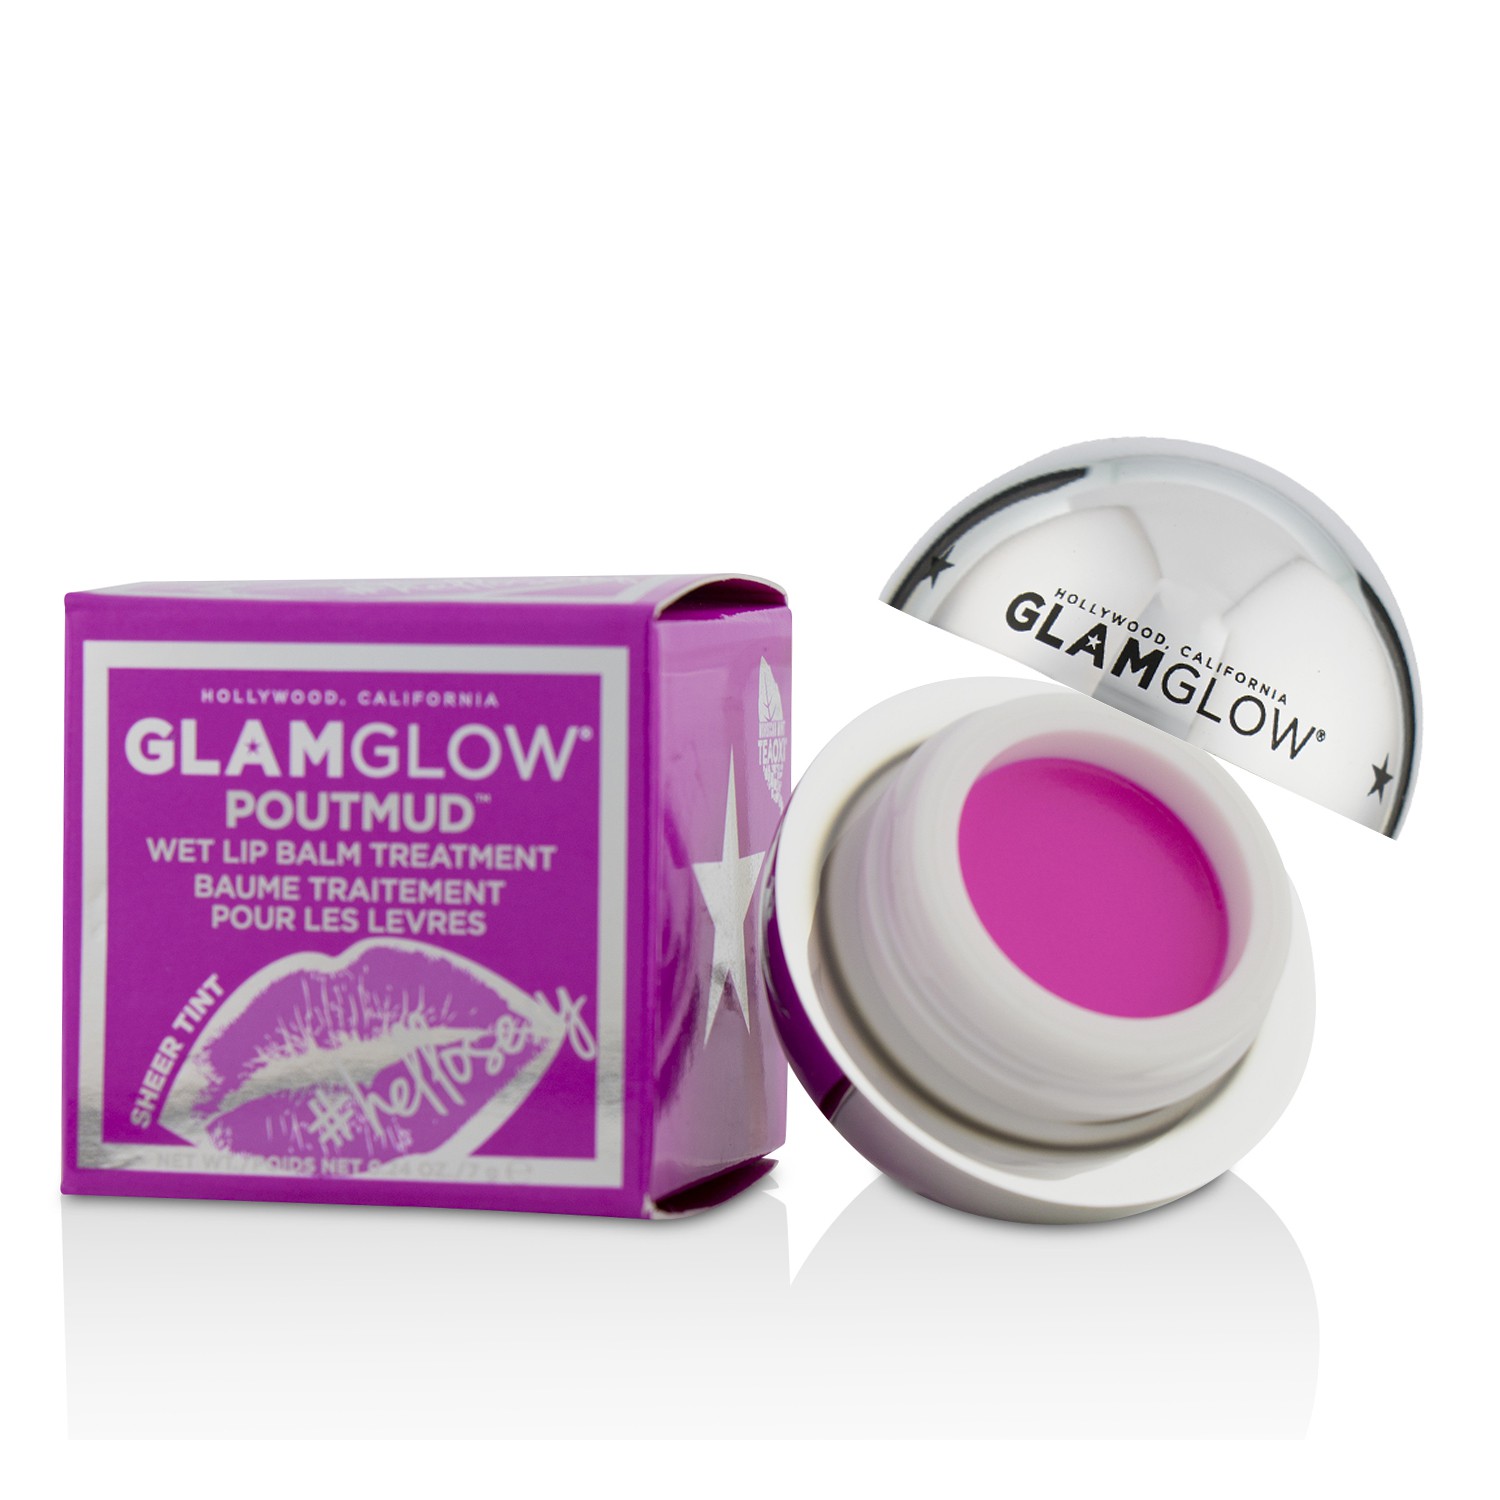 PoutMud Sheer Tint Wet Lip Balm Treatment - HelloSexy Glamglow Image